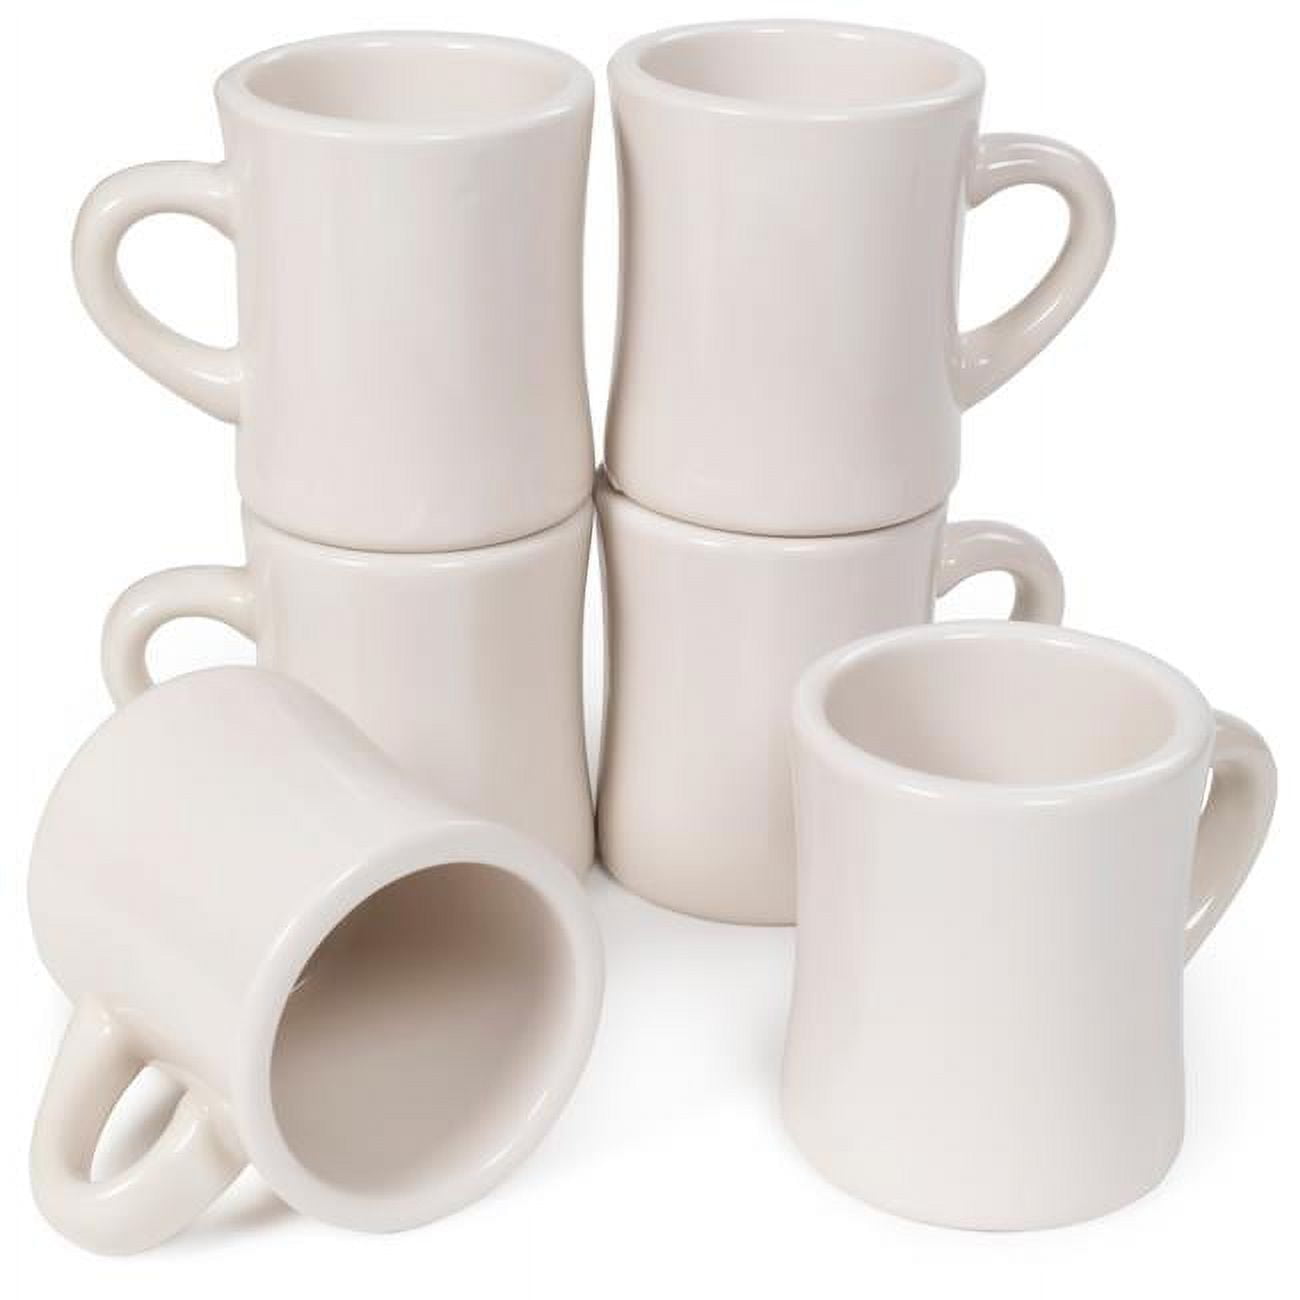 Kcfc-001 10 Oz Coffee Mugs - Pack Of 6